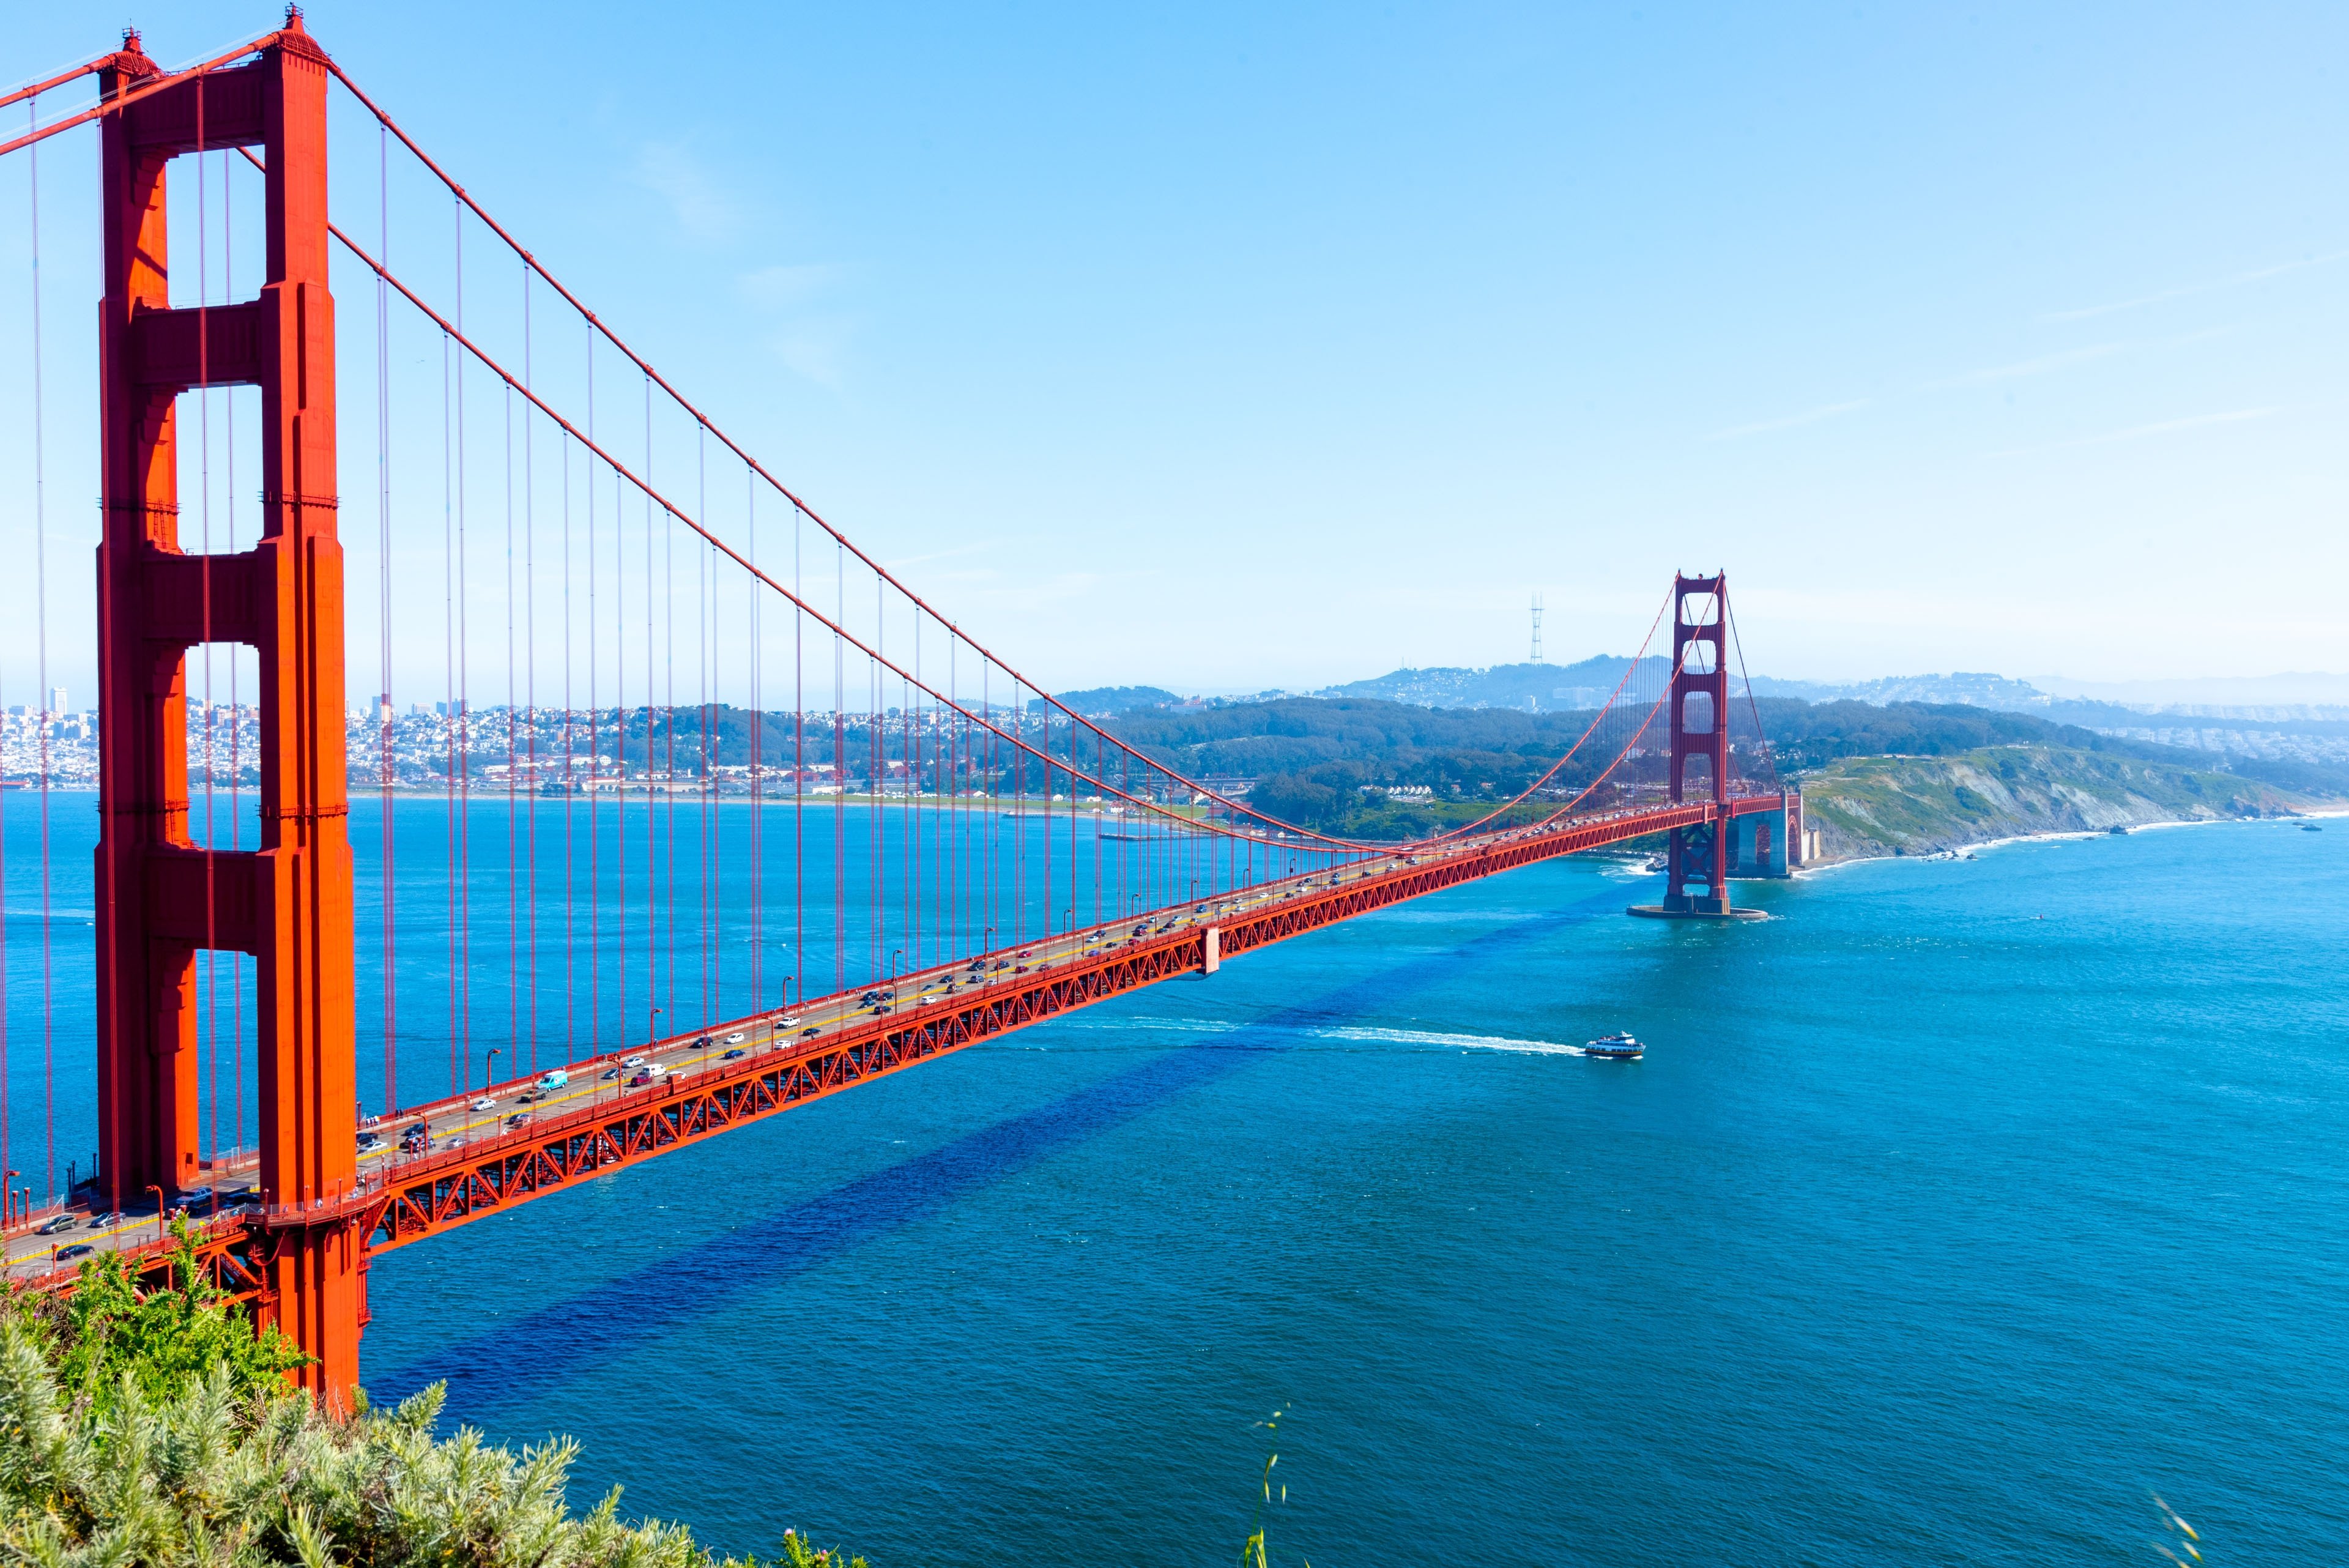 Сан франциско какой. Золотые ворота Сан-Франциско. Голден гейт Сан Франциско. Мост золотые ворота (г. Сан-Франциско). Мост Golden Gate в Сан-Франциско.